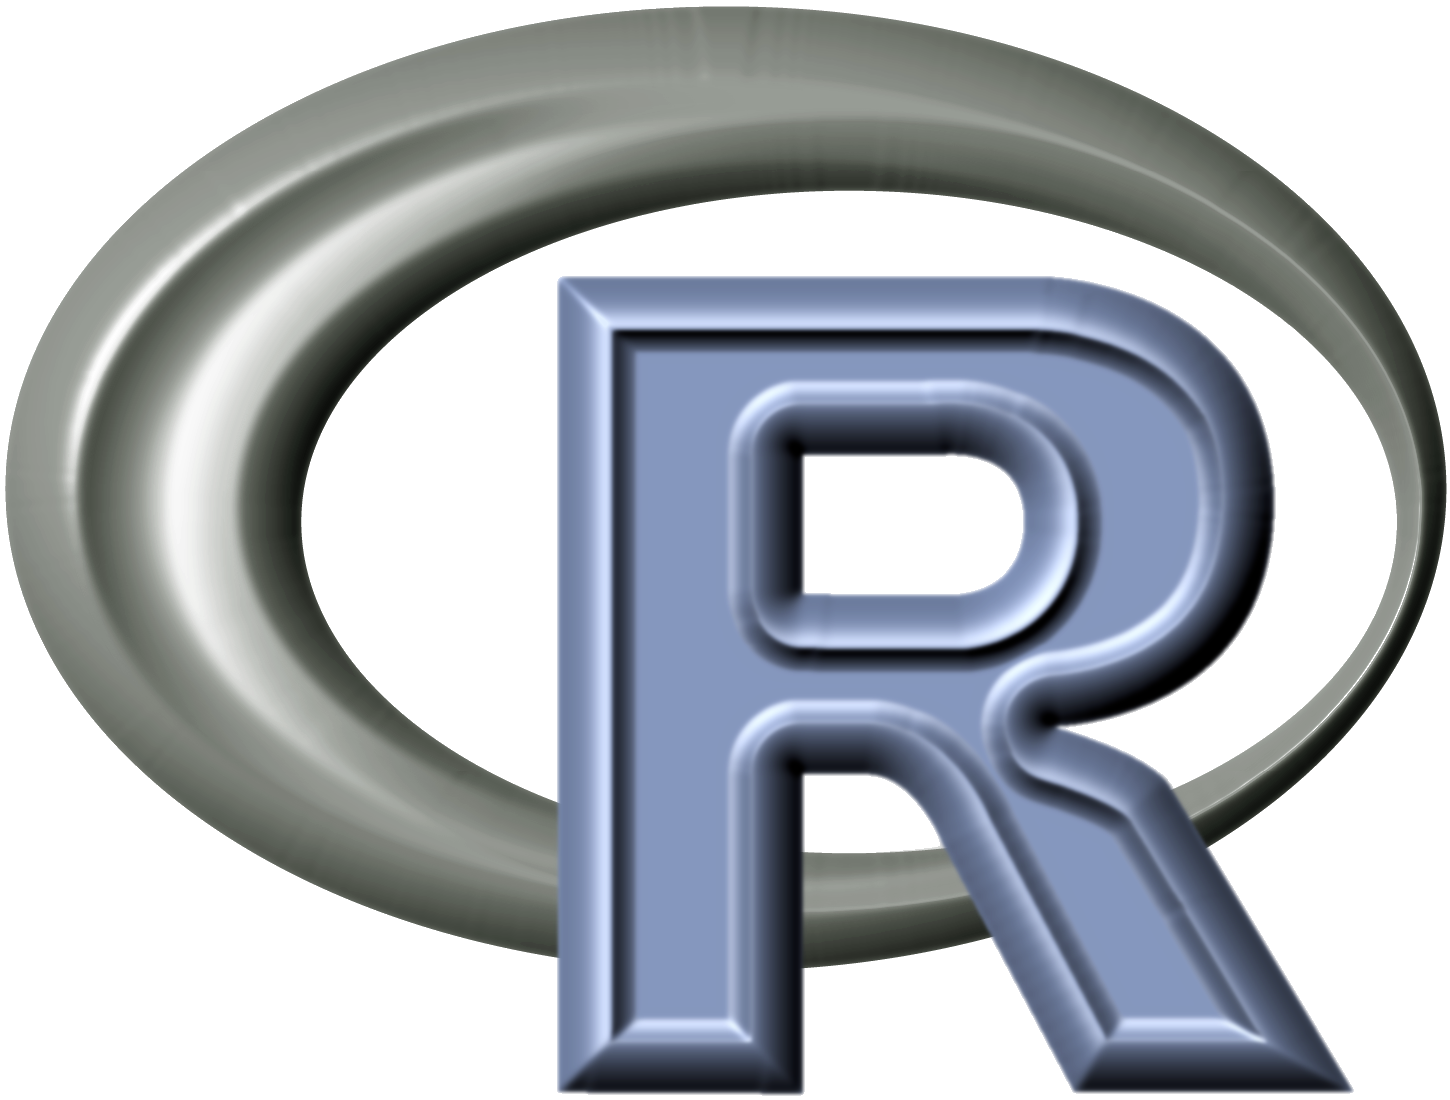 R language for statistical computing